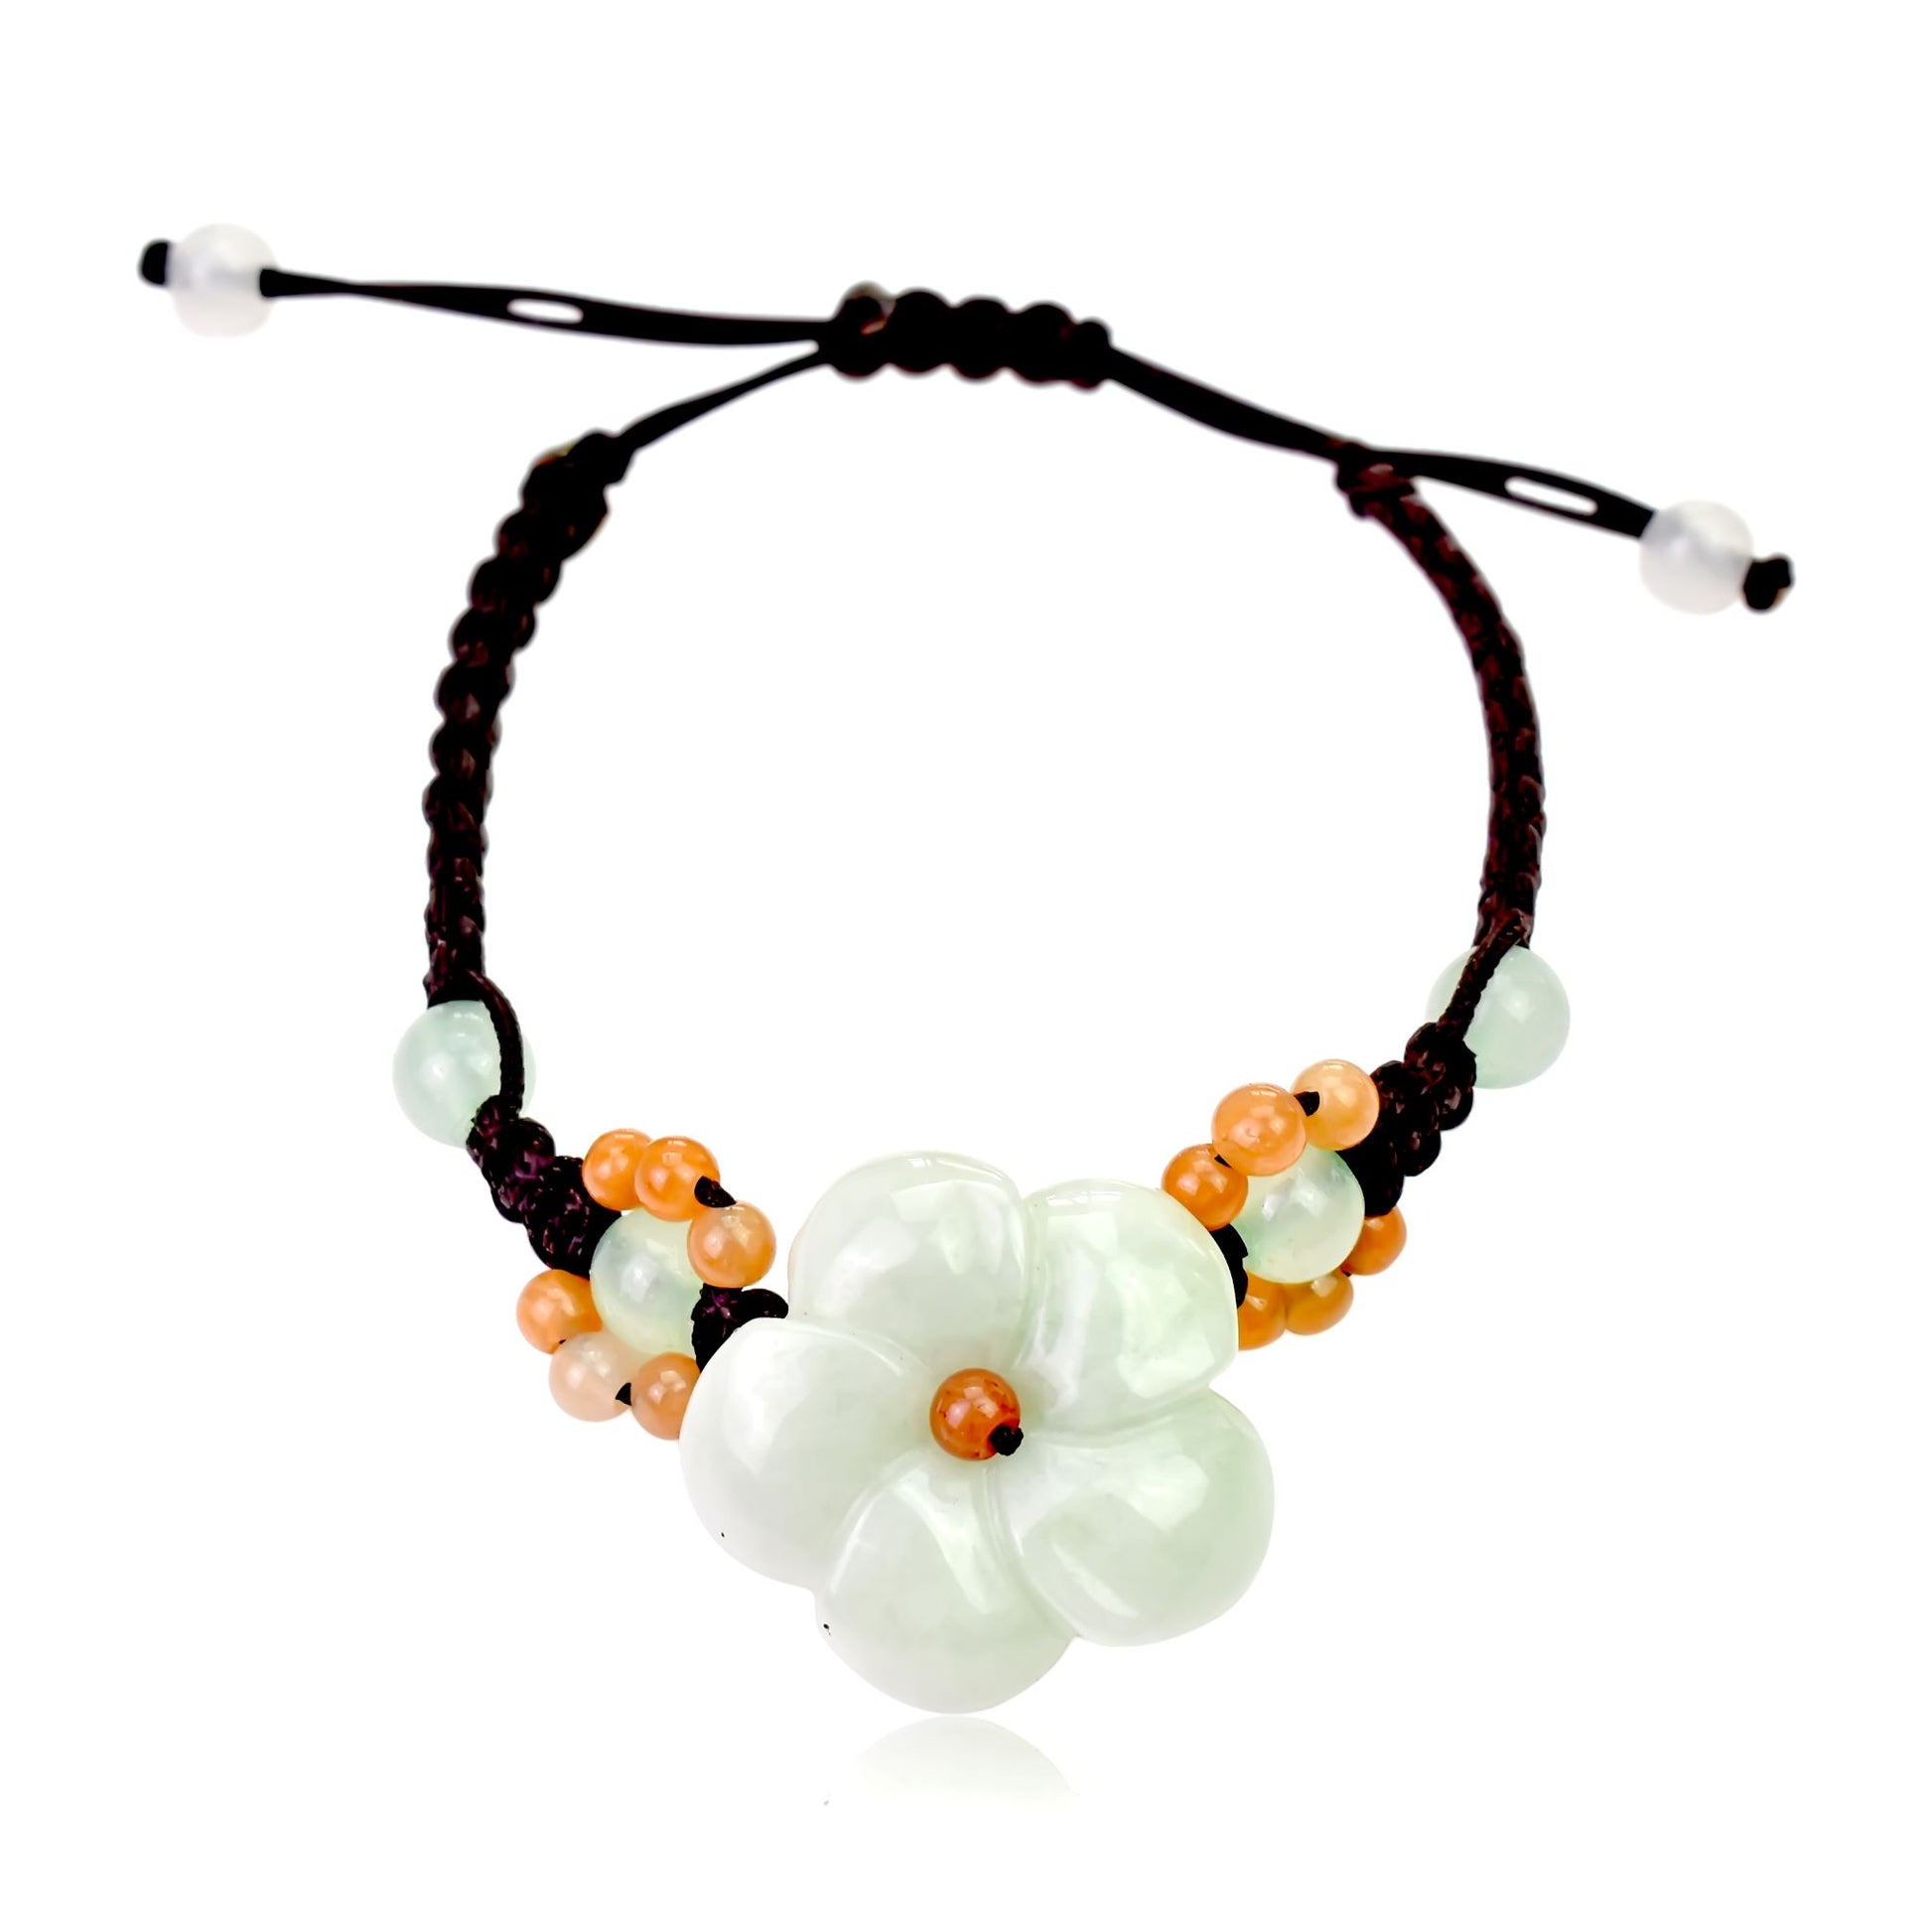 Enjoy a Unique & Stylish Look with the Evening Primrose Flower Bracelet